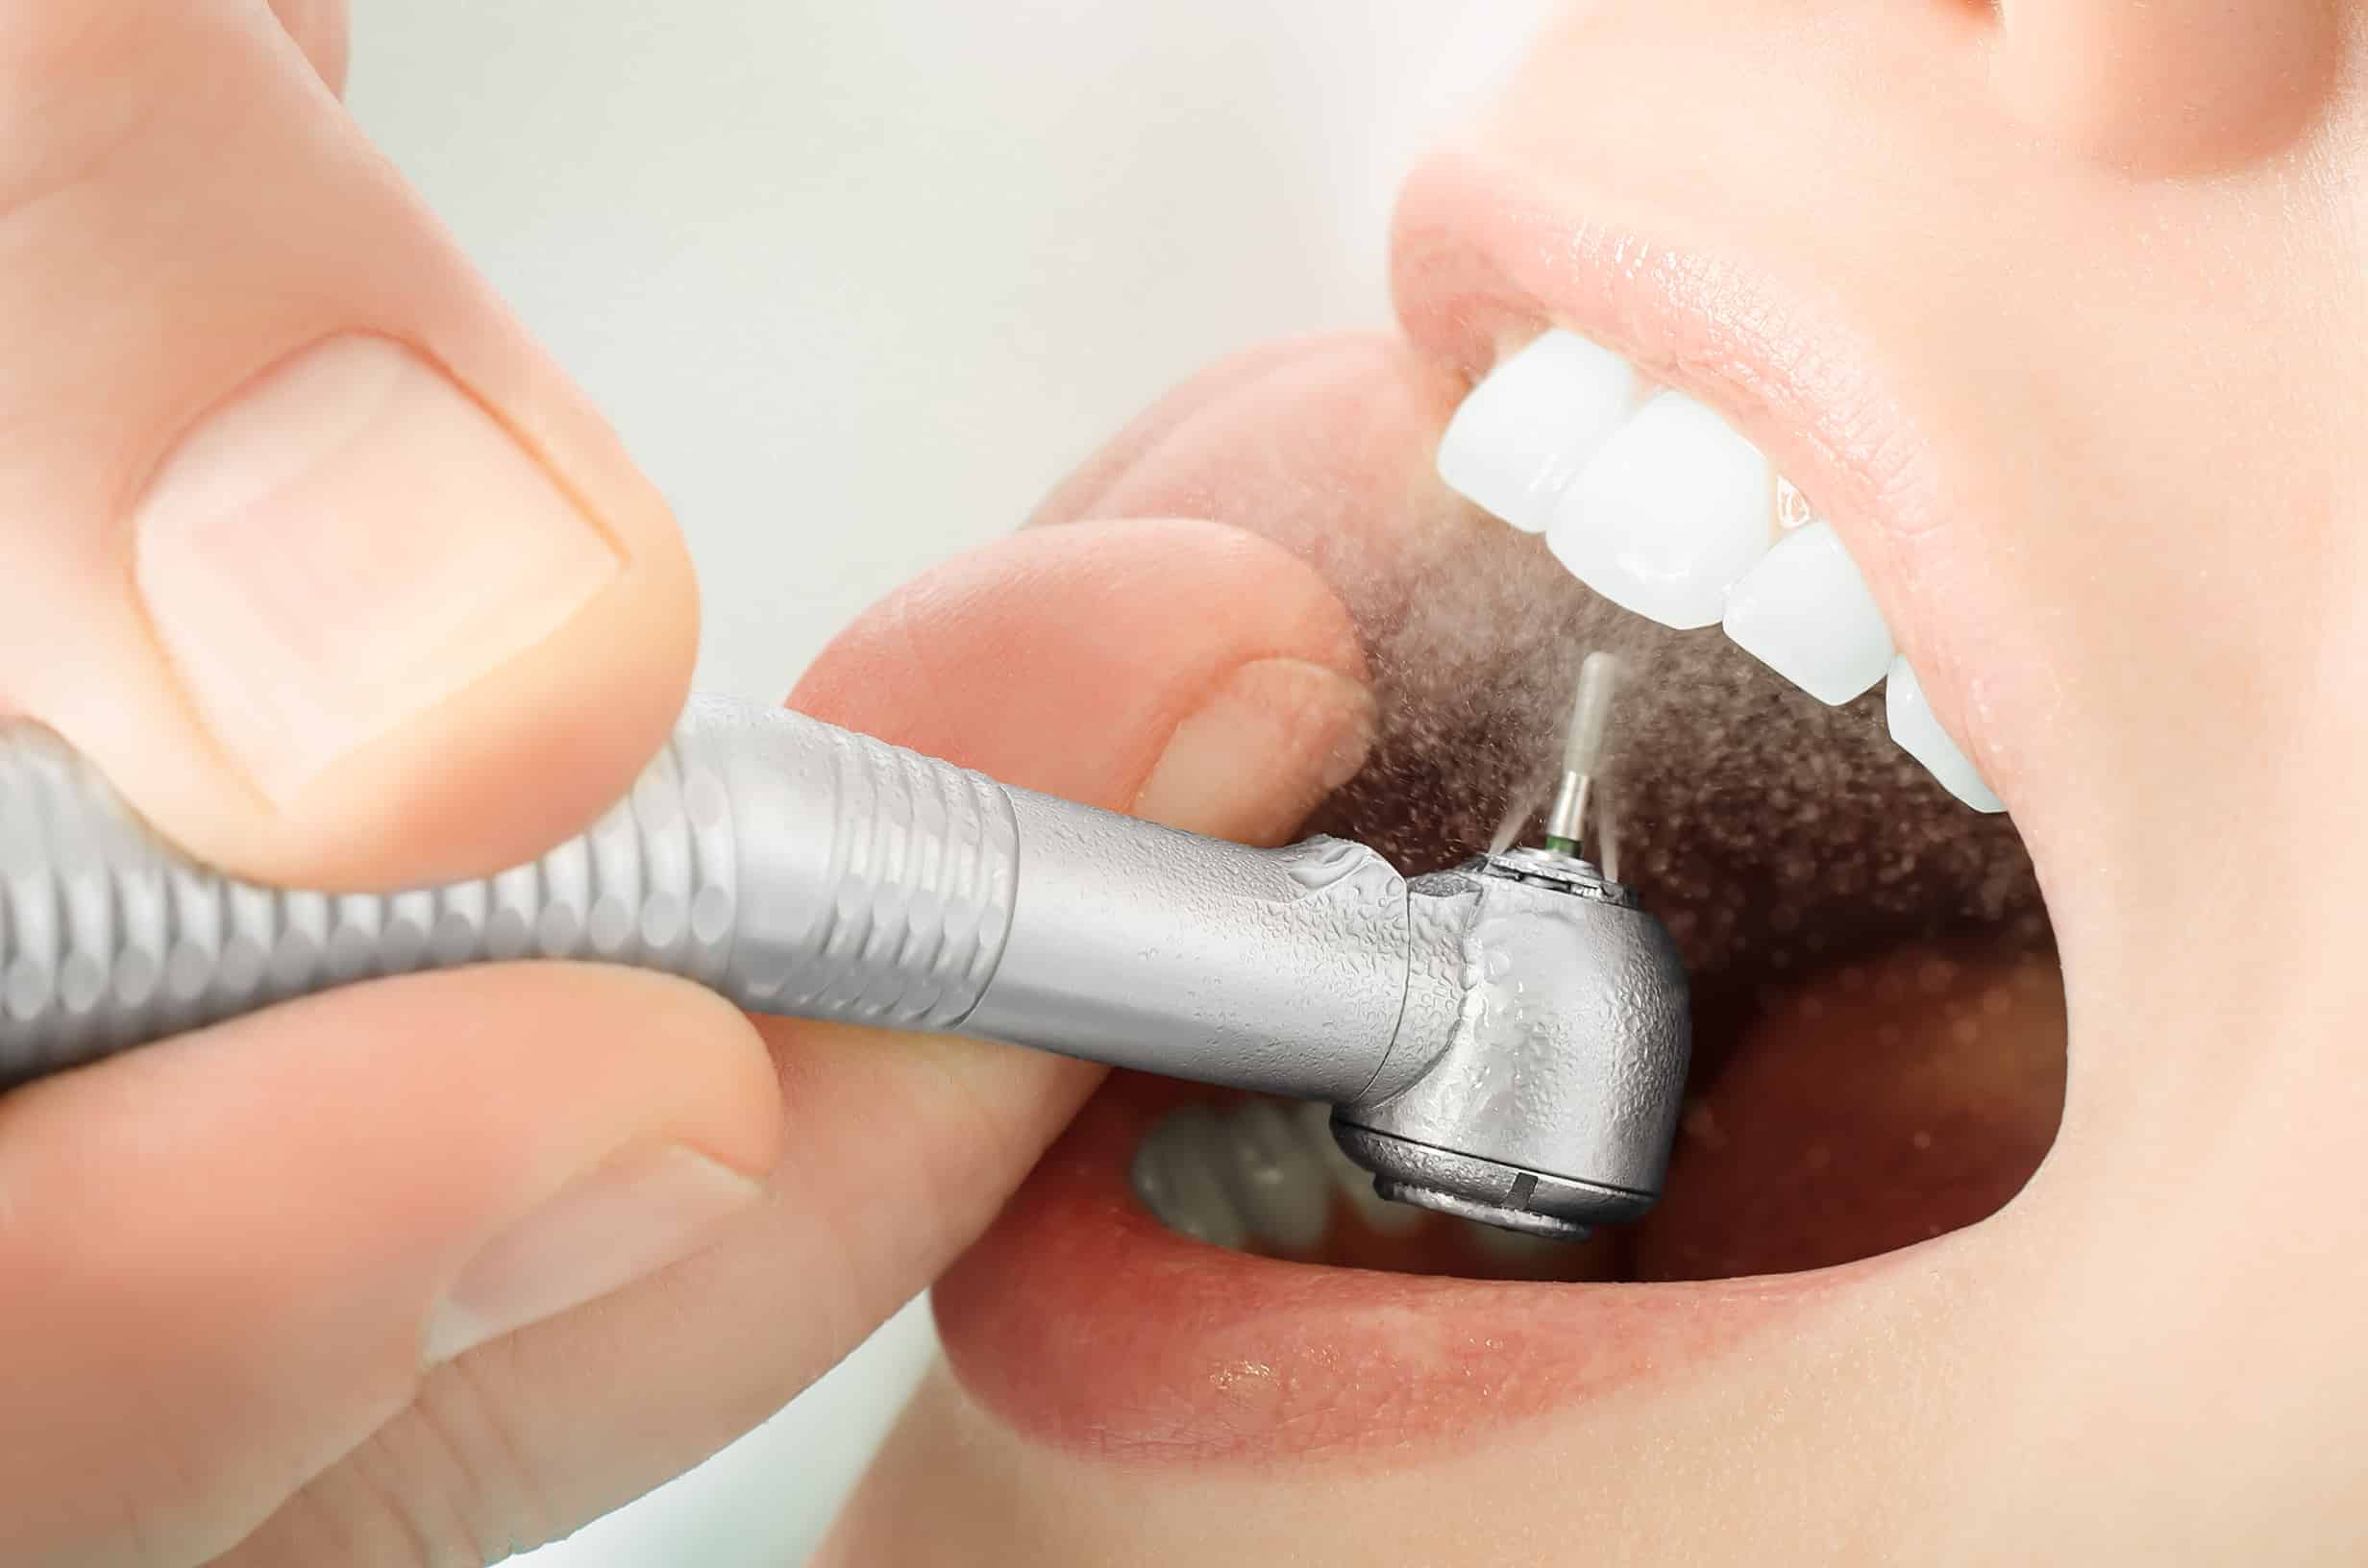 Types of Dental Restoration